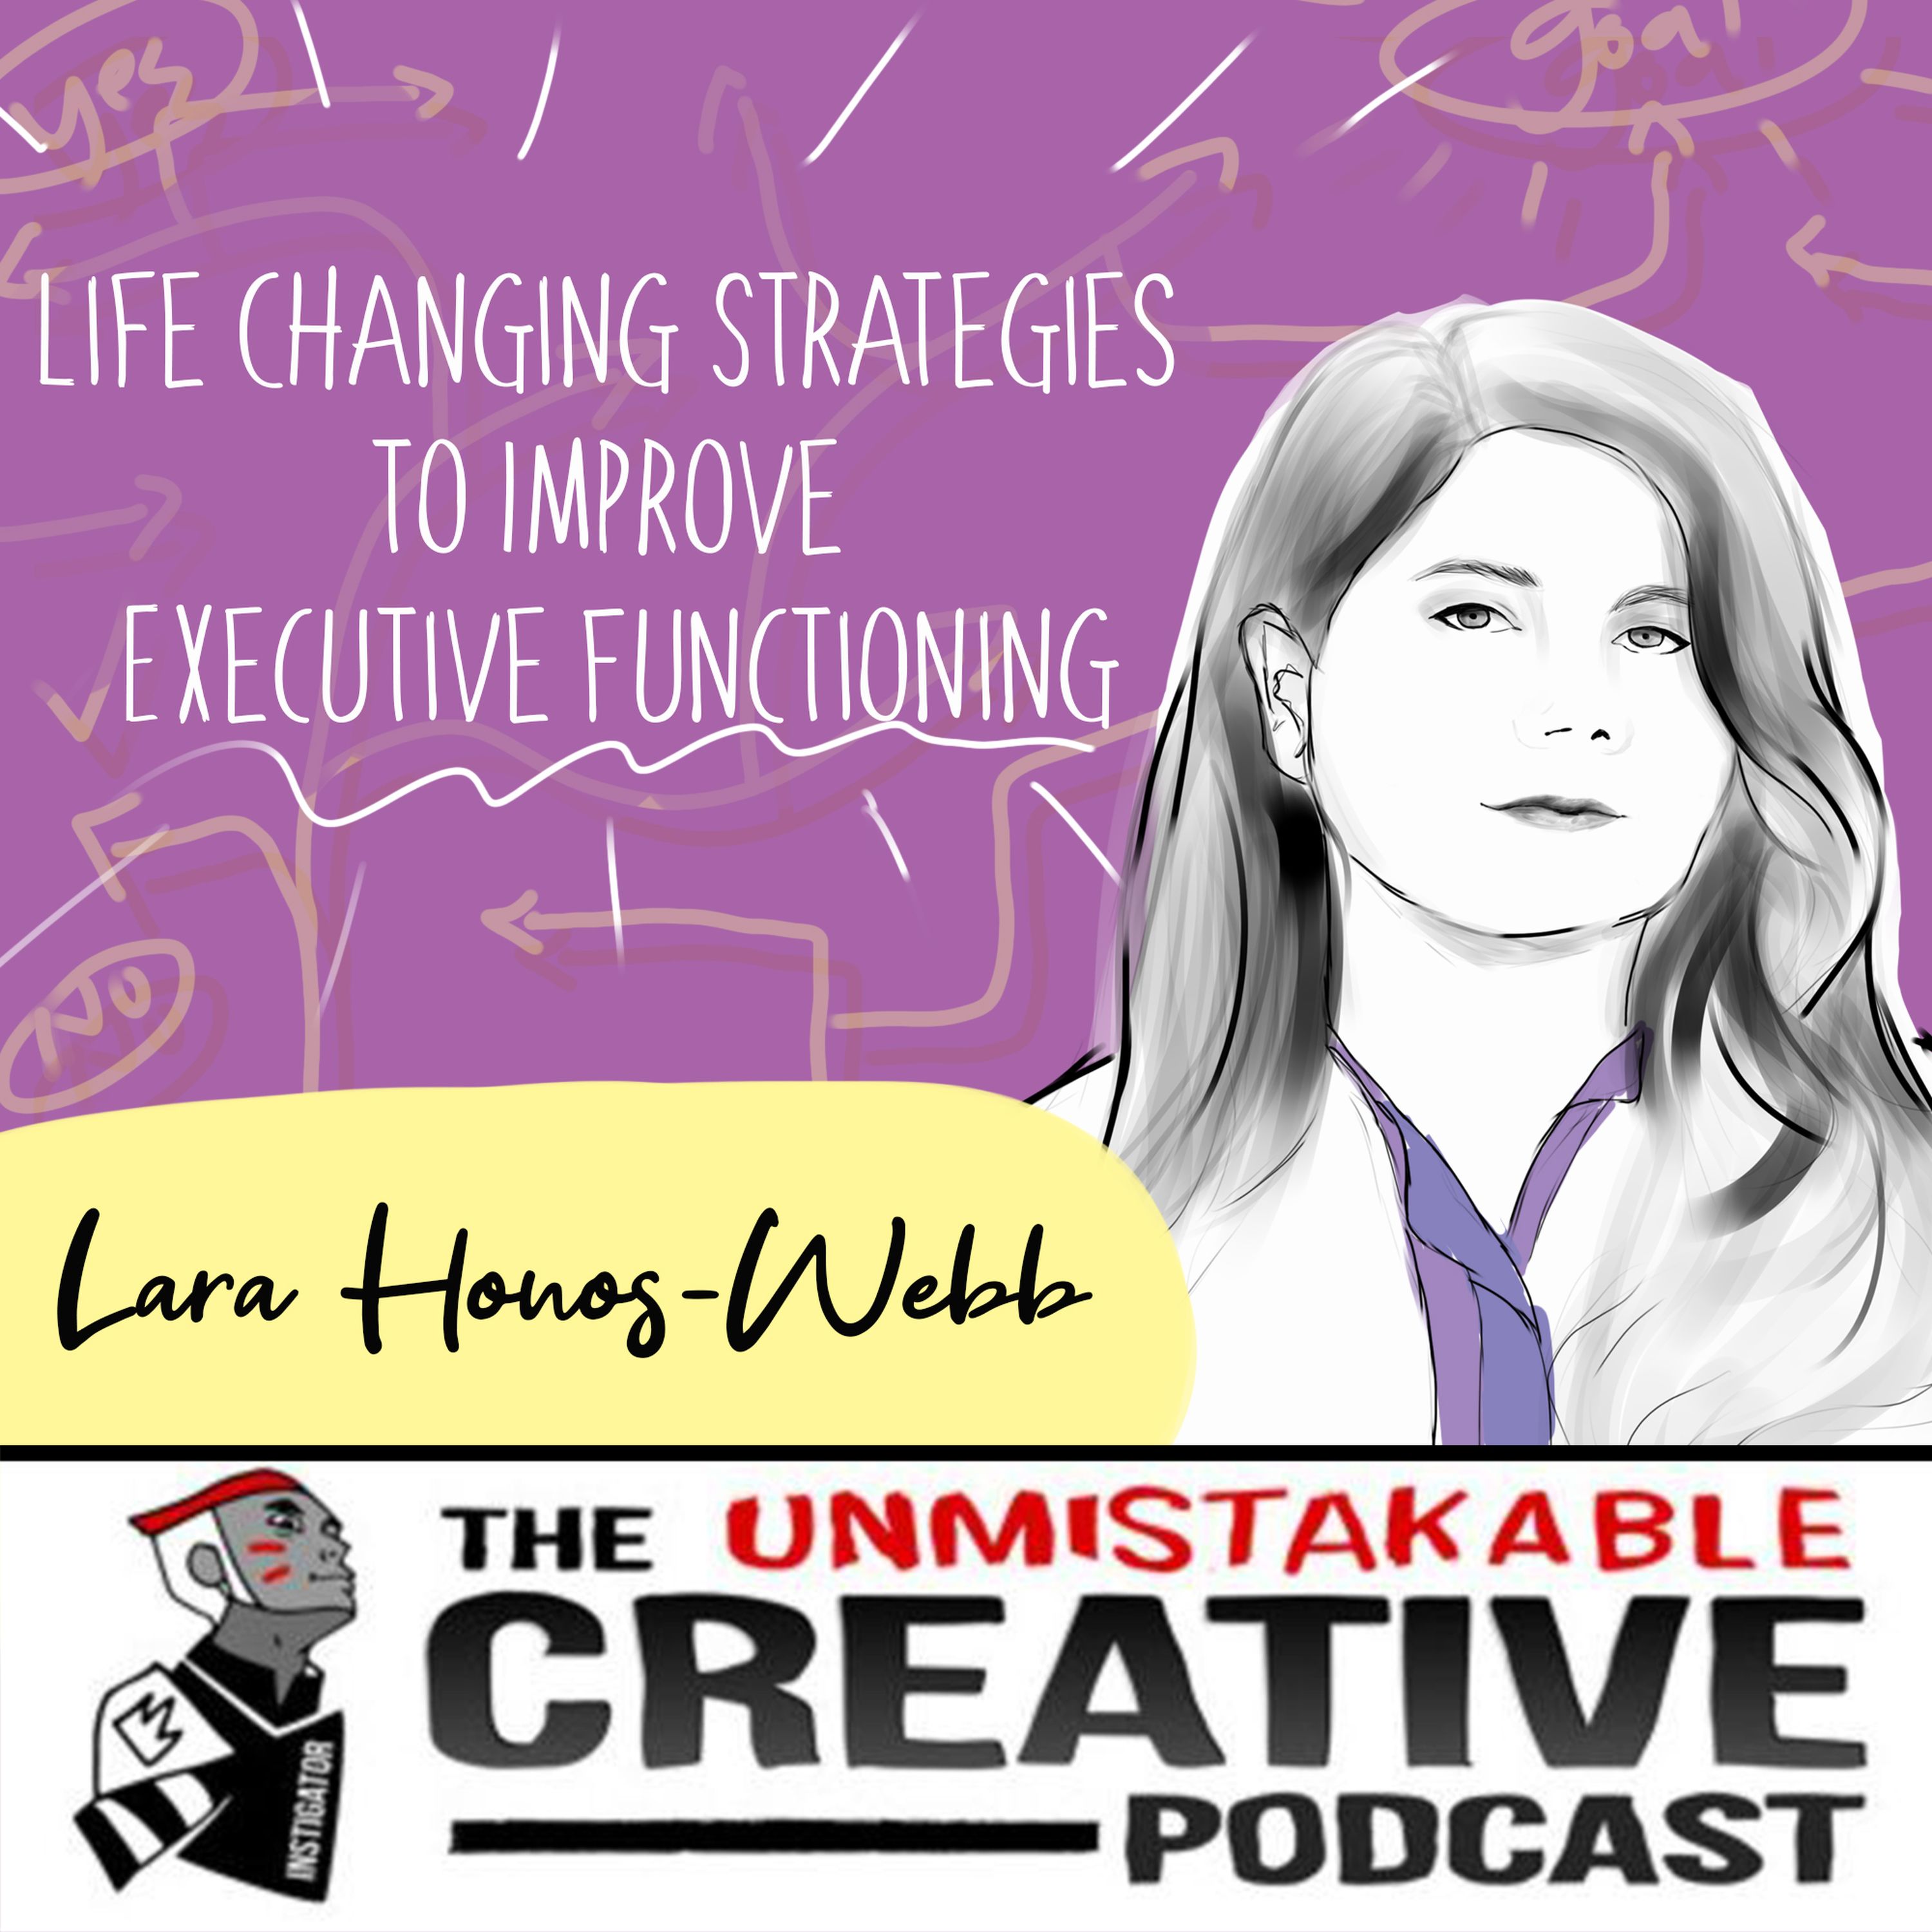 Life Changing Strategies to Improve Executive Functioning with Lara Honos-Webb